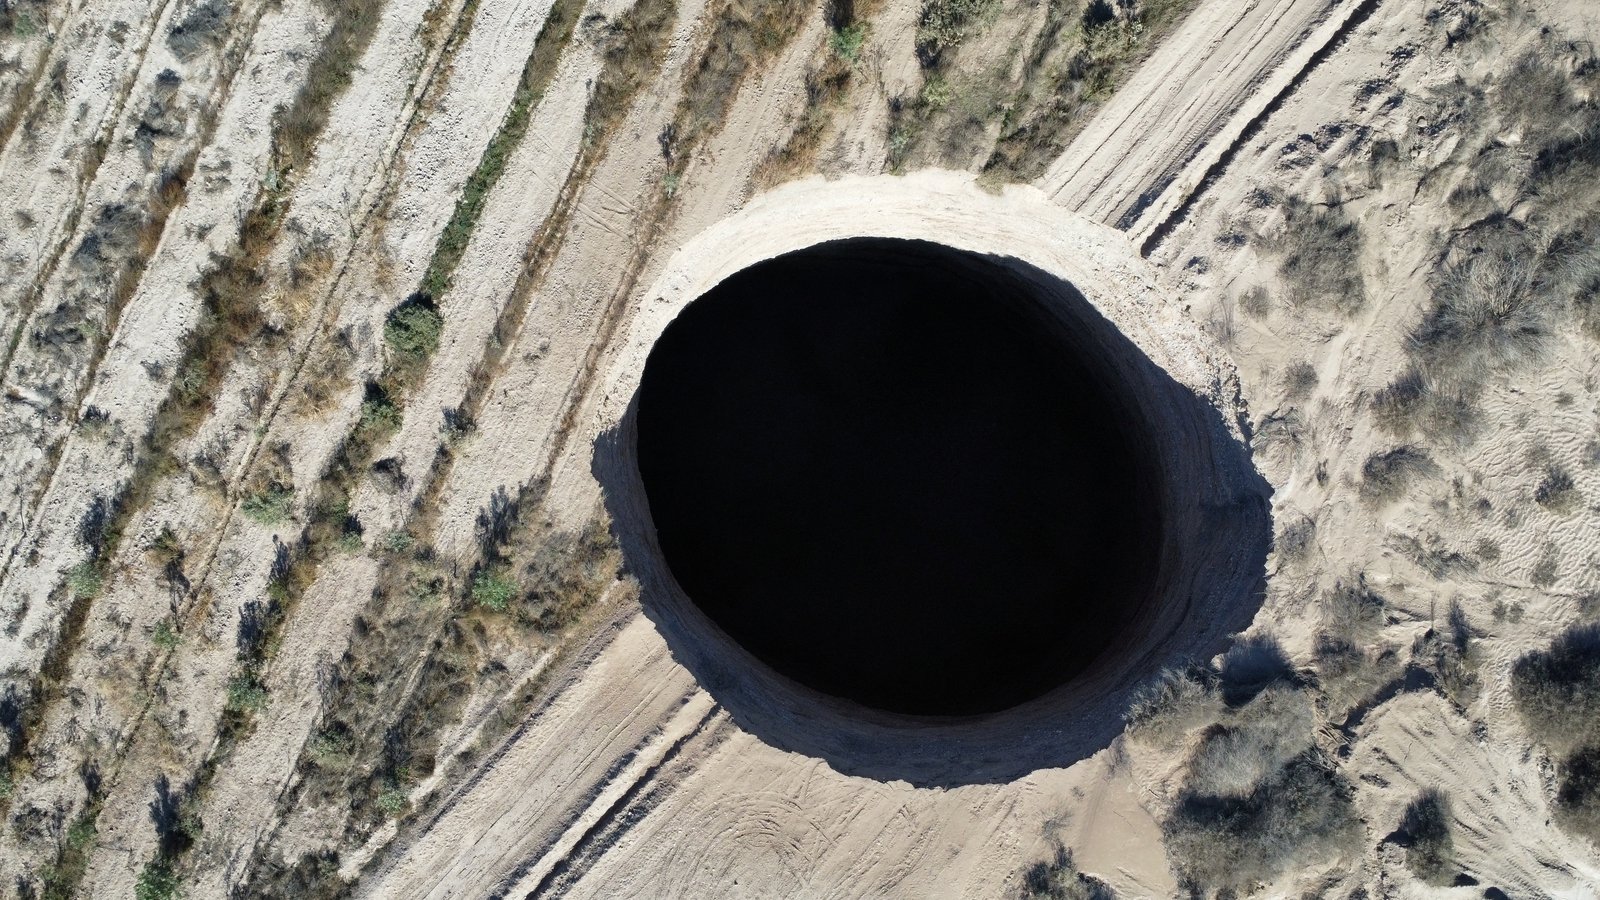 Chile sinkhole large enough to swallow Arc de Triomphe